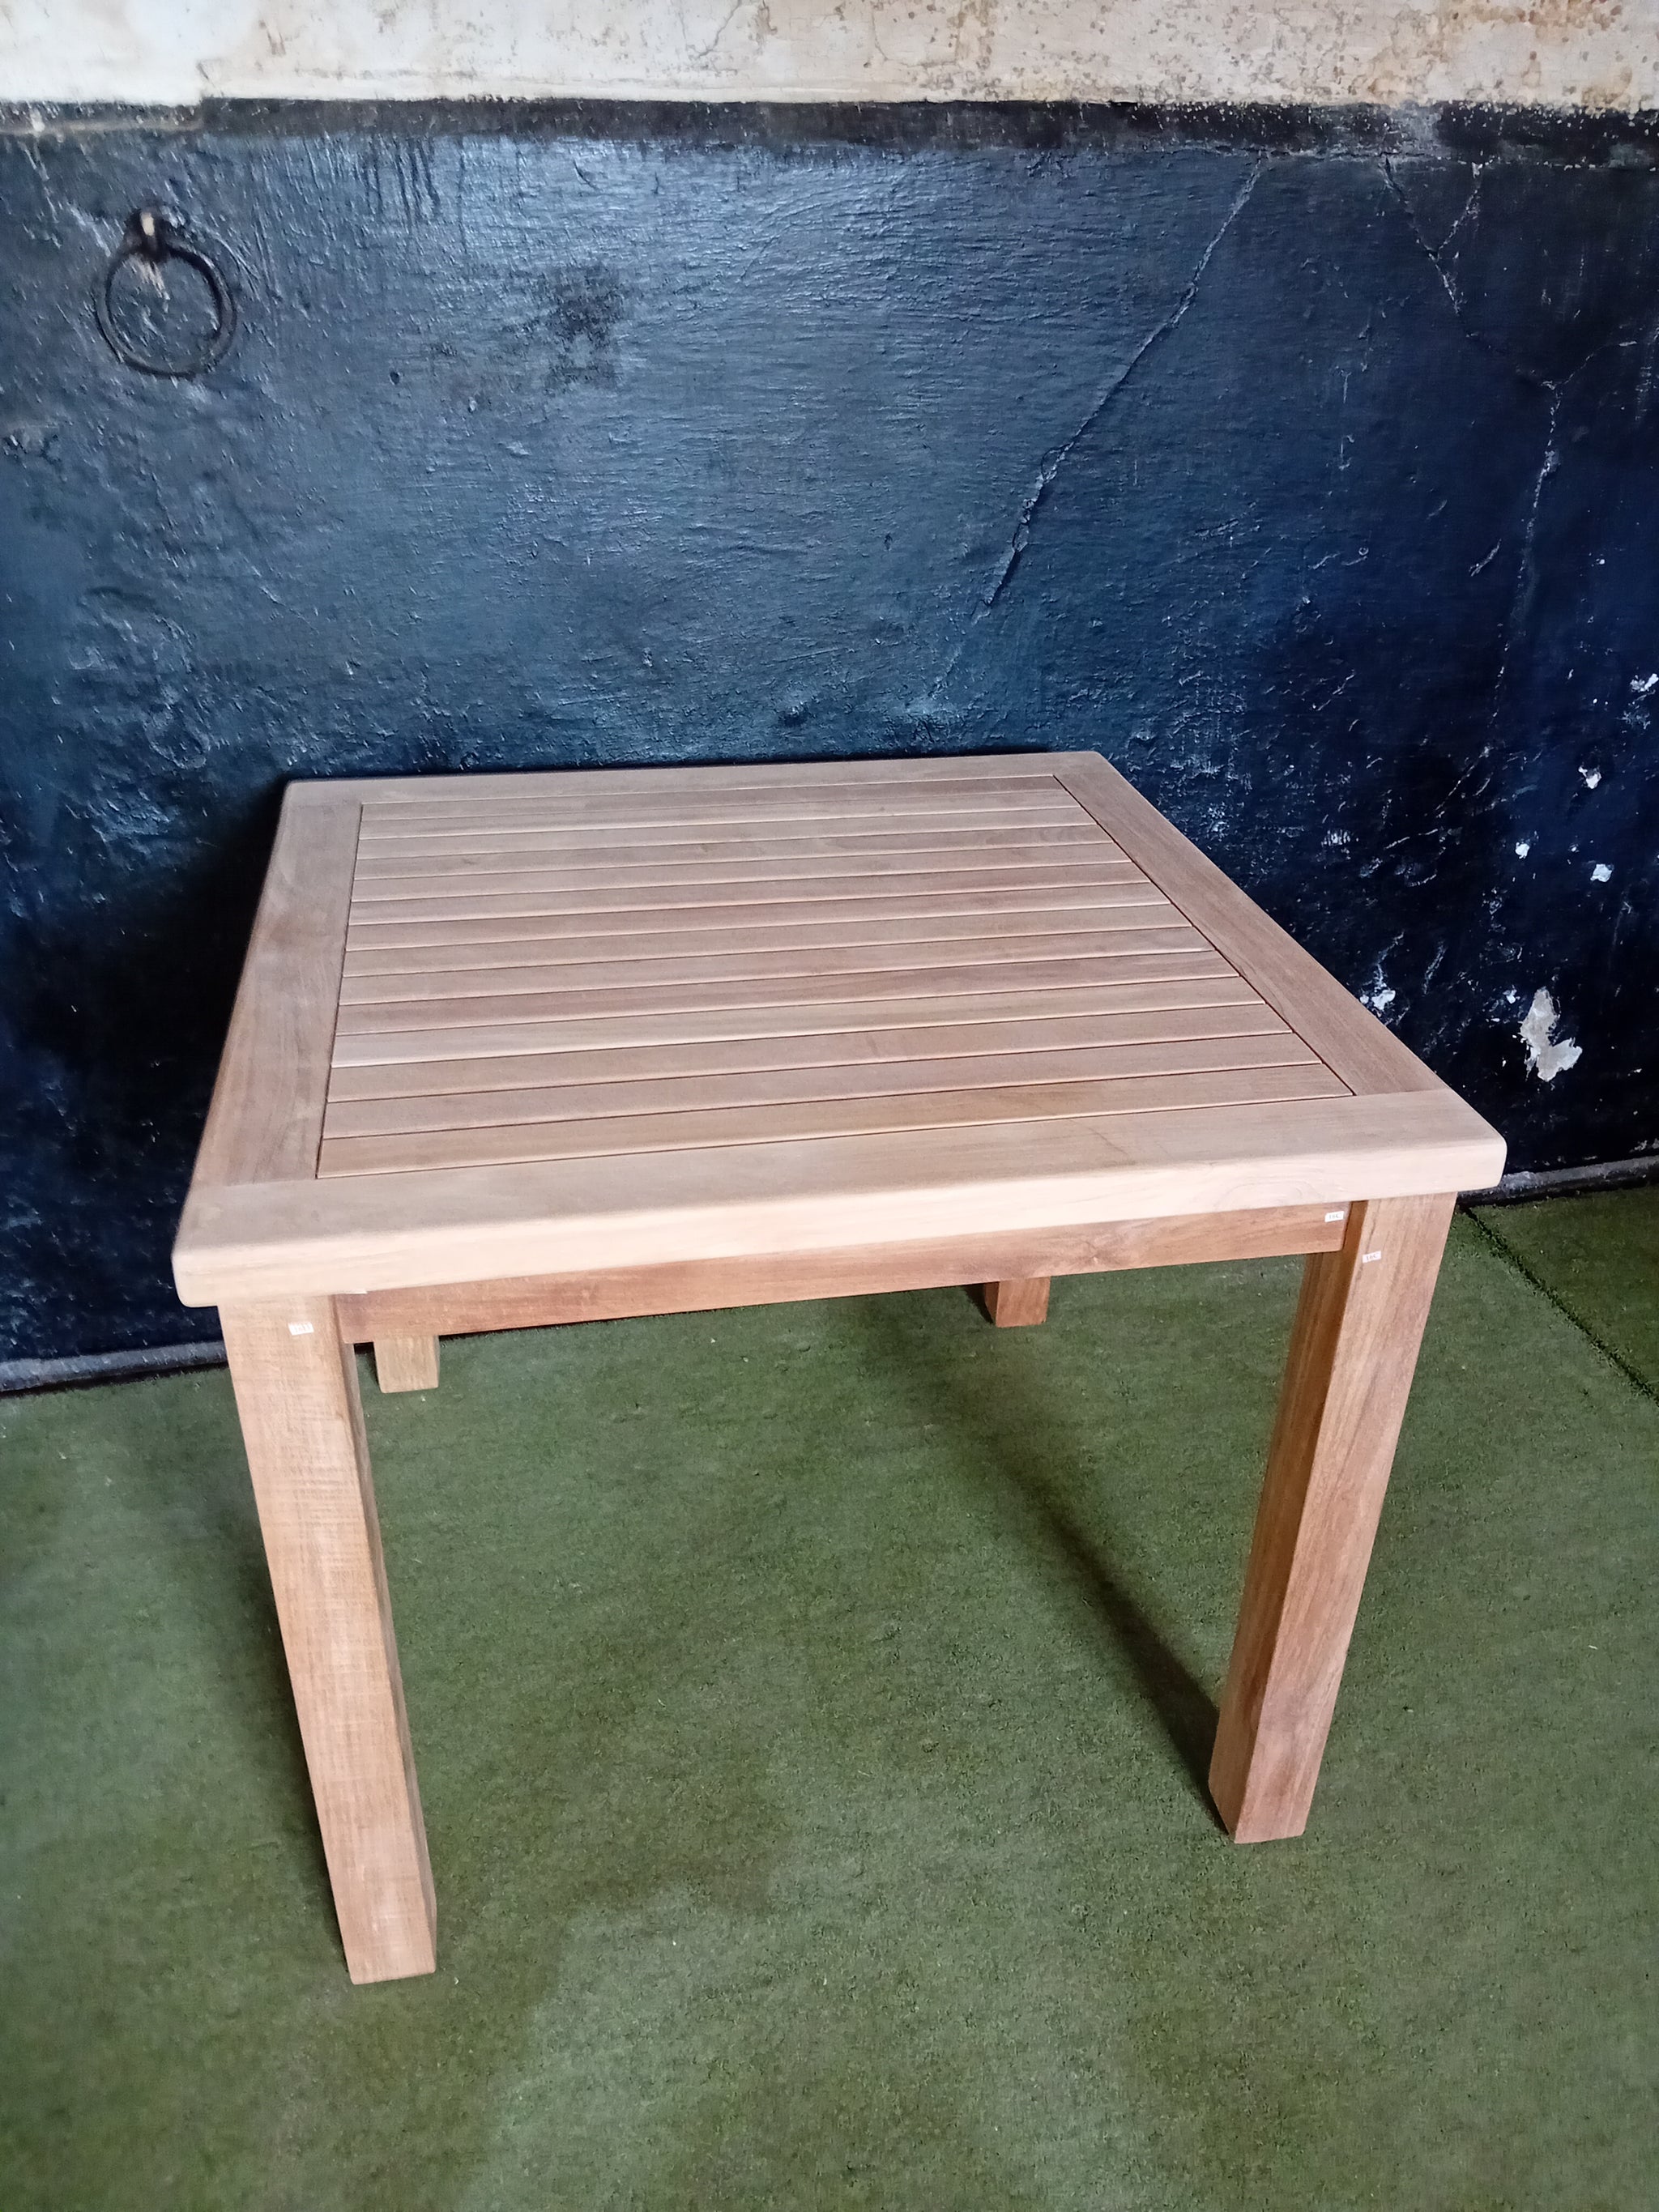 SALE - Fixed Square Garden Teak Table 90cm (2-4 Seater) 23049